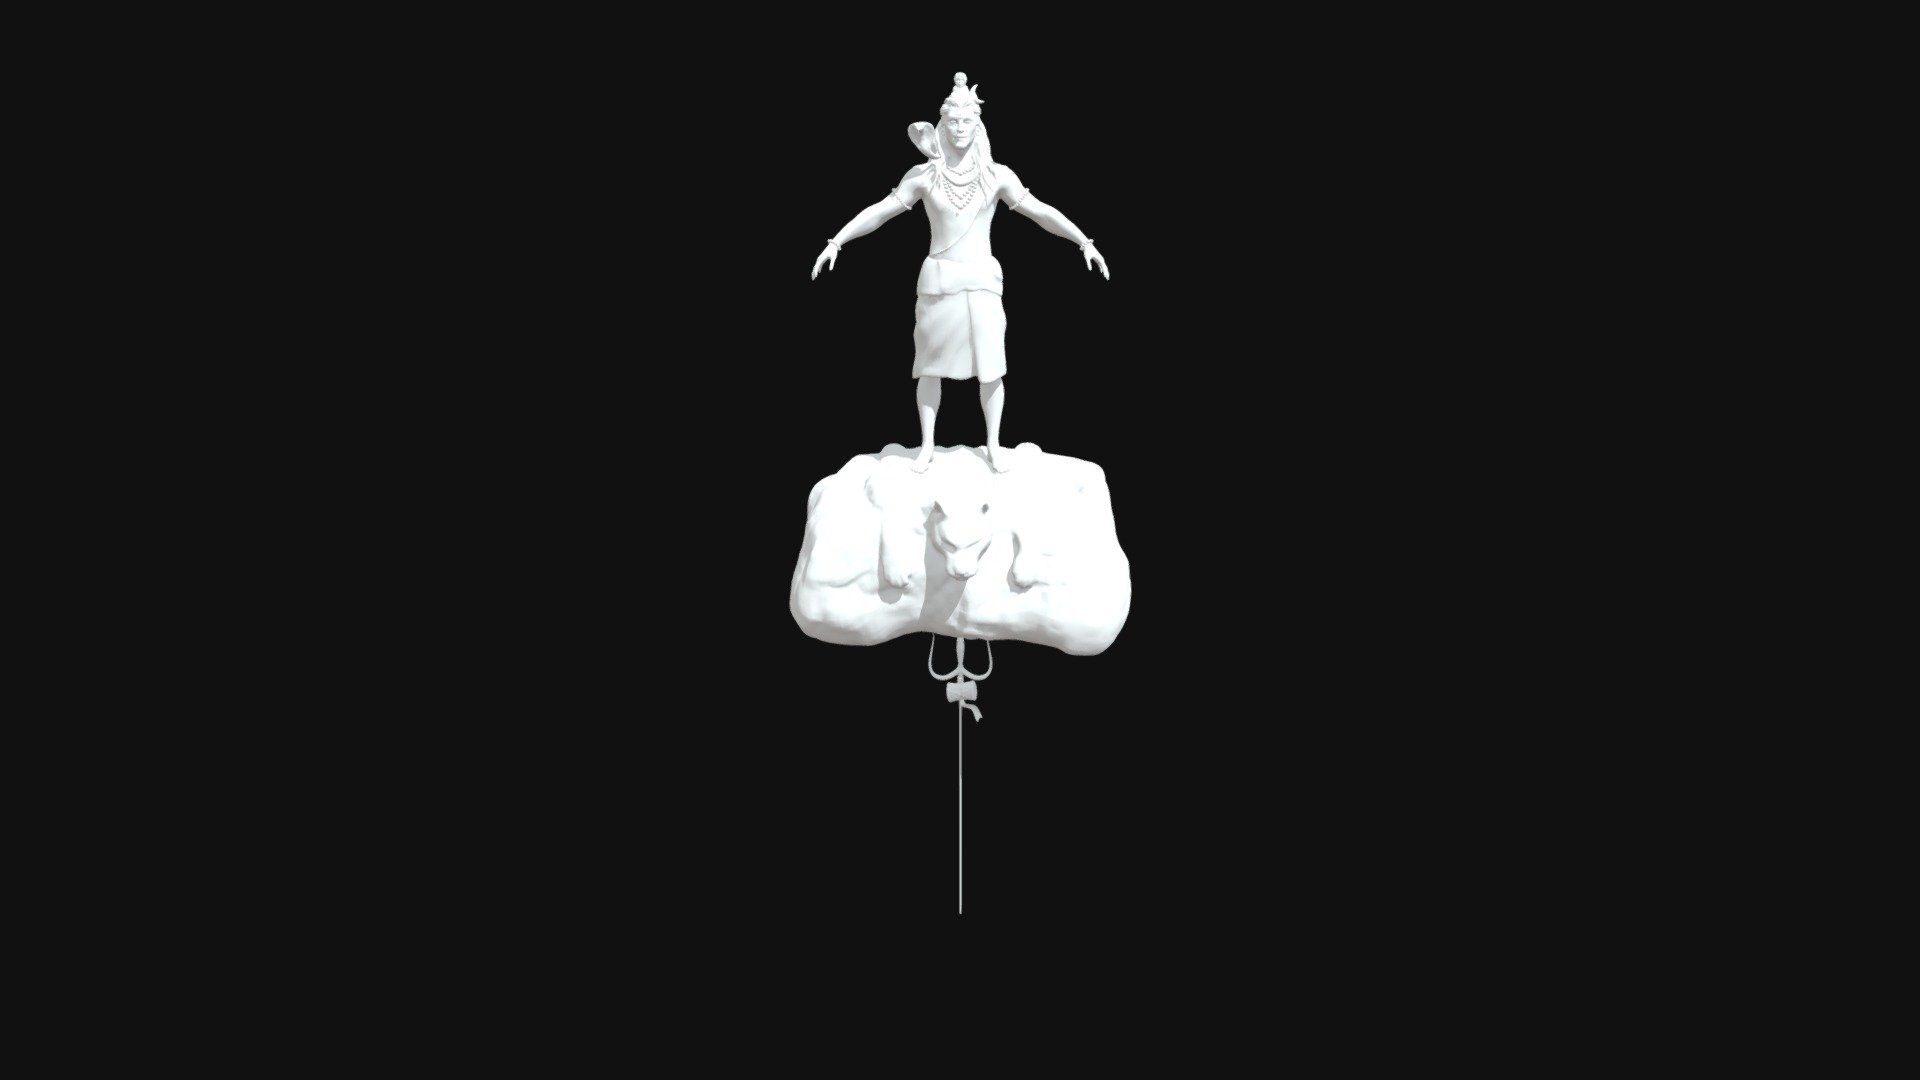 Indian Gods I : Lord Shiva Statue
[Unity Asset Pack] - Indian Gods I : Lord Shiva Statue - 3D model by AbhiTechGames (@atgstudiosinfo) 3d model